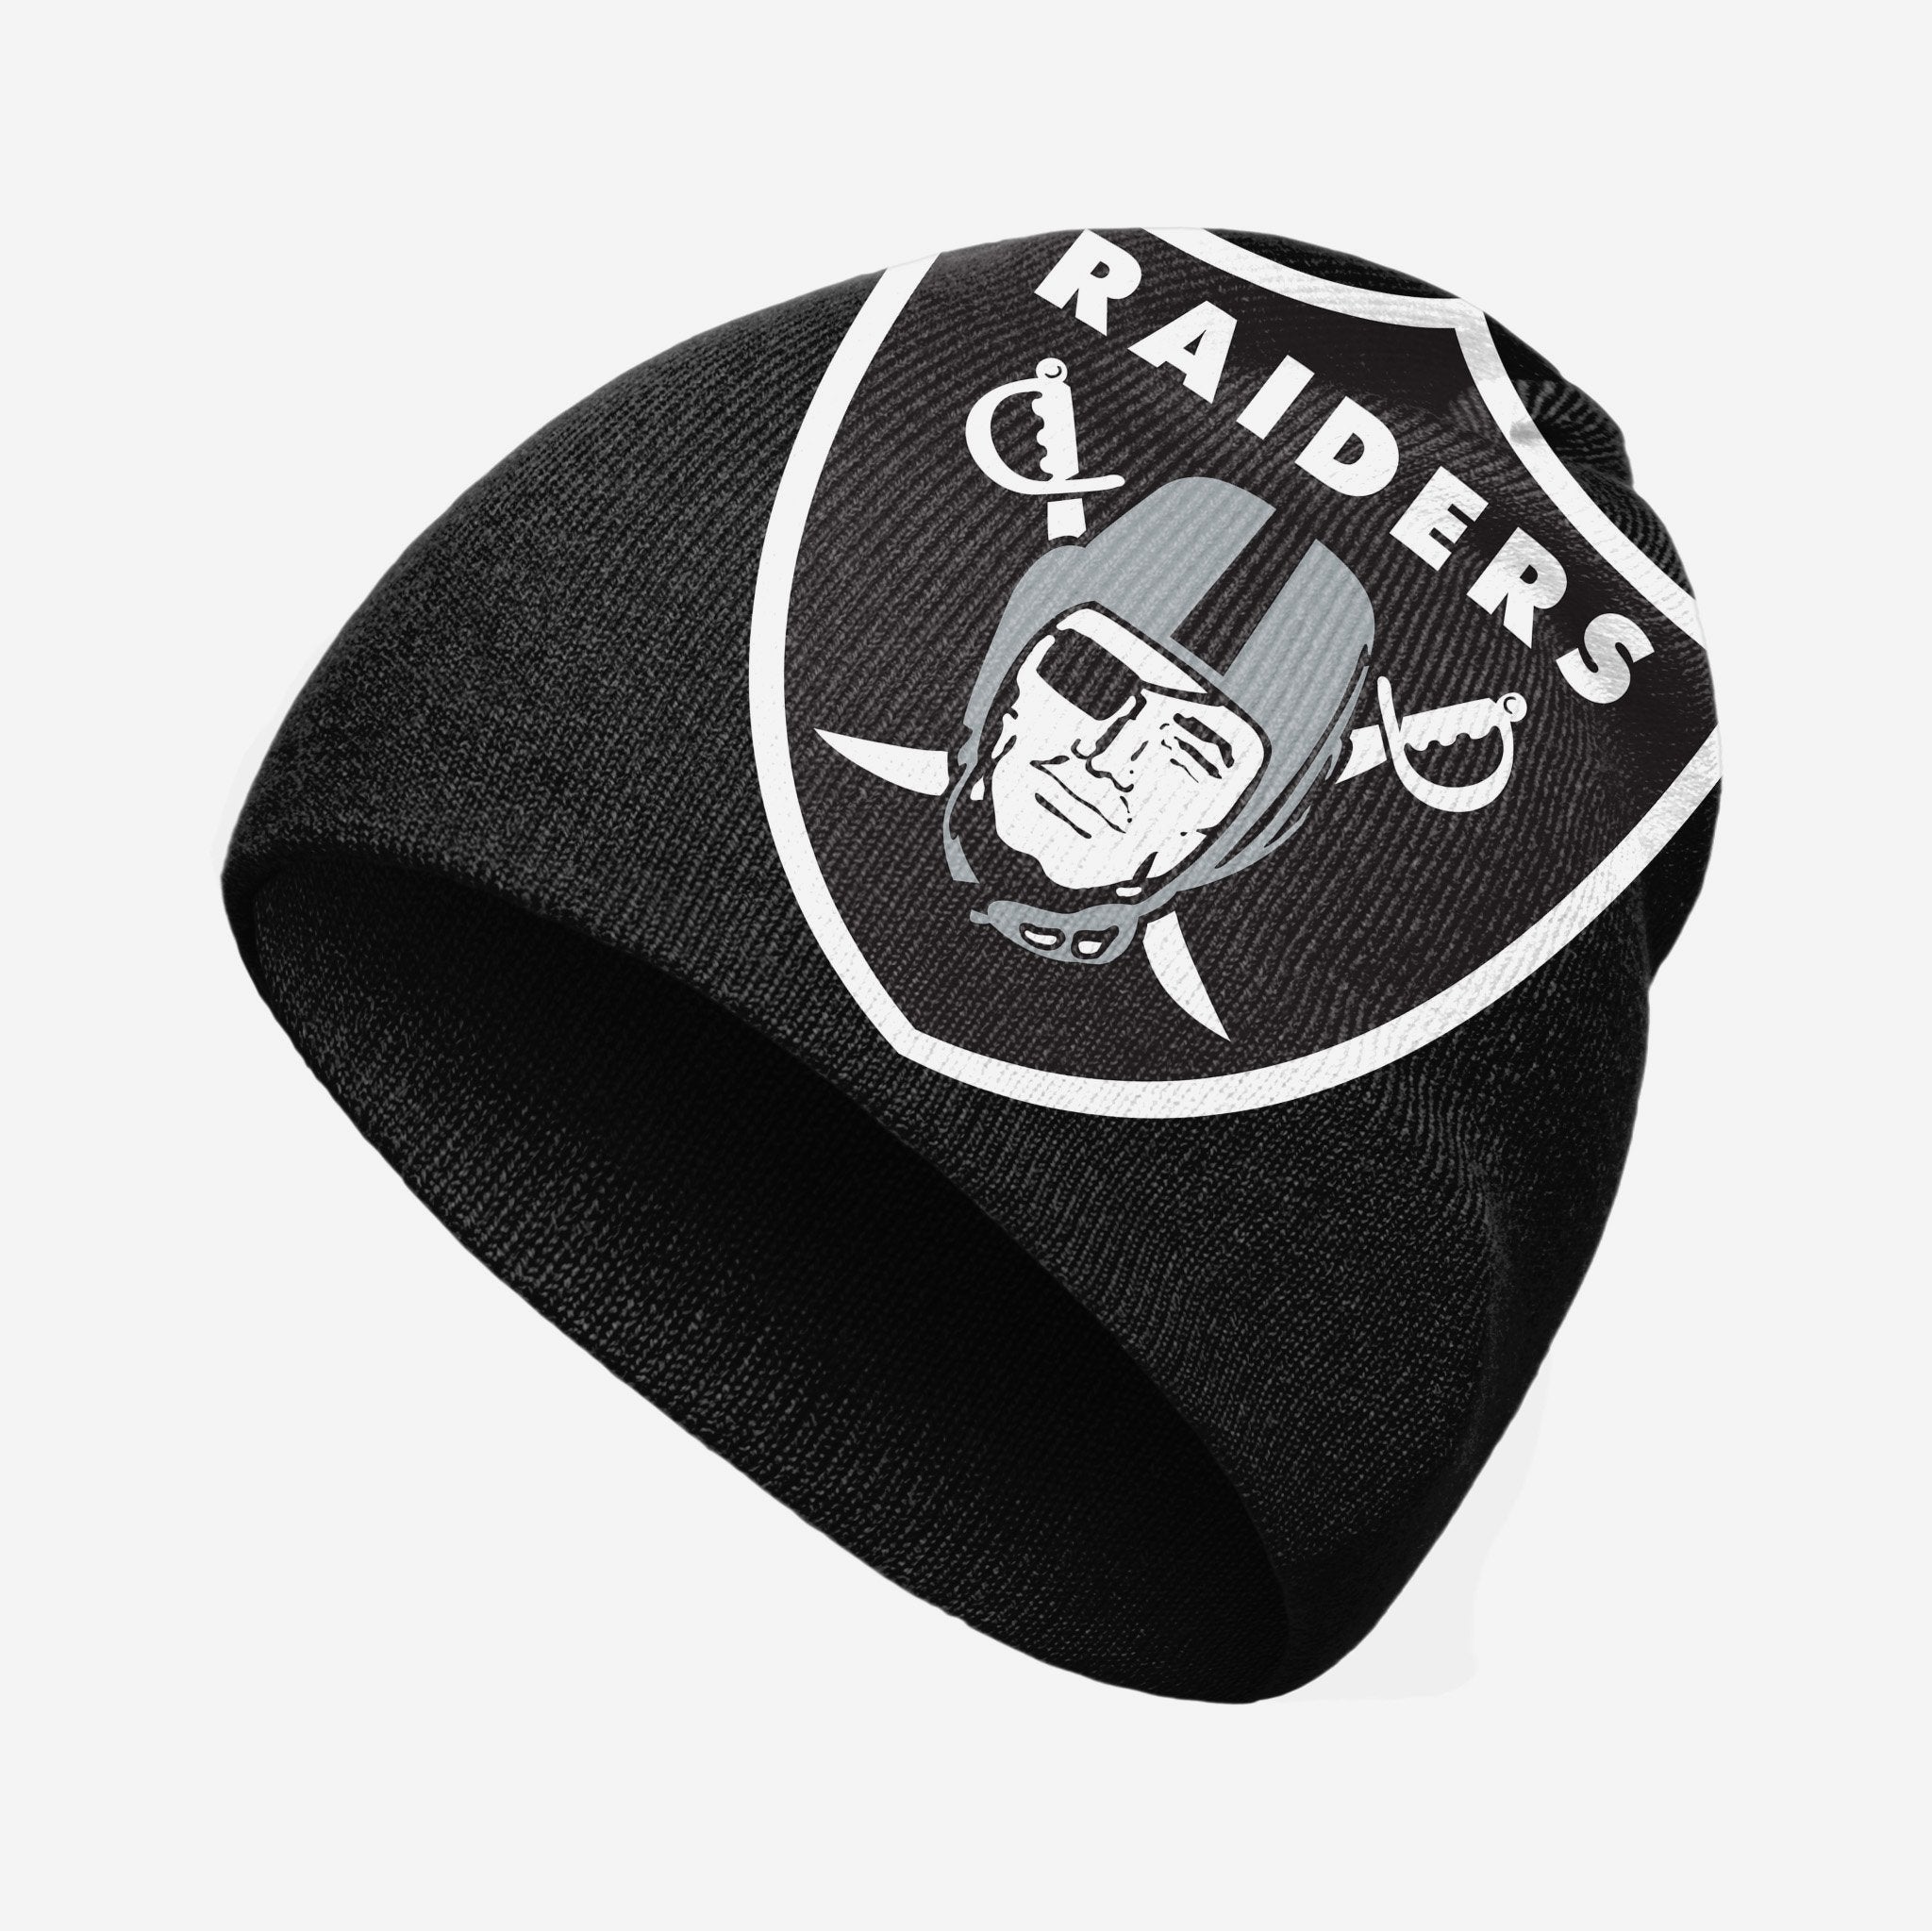 Official Las Vegas Raiders Beanies, Raiders Knit Hats, Winter Hats, Skull  Caps